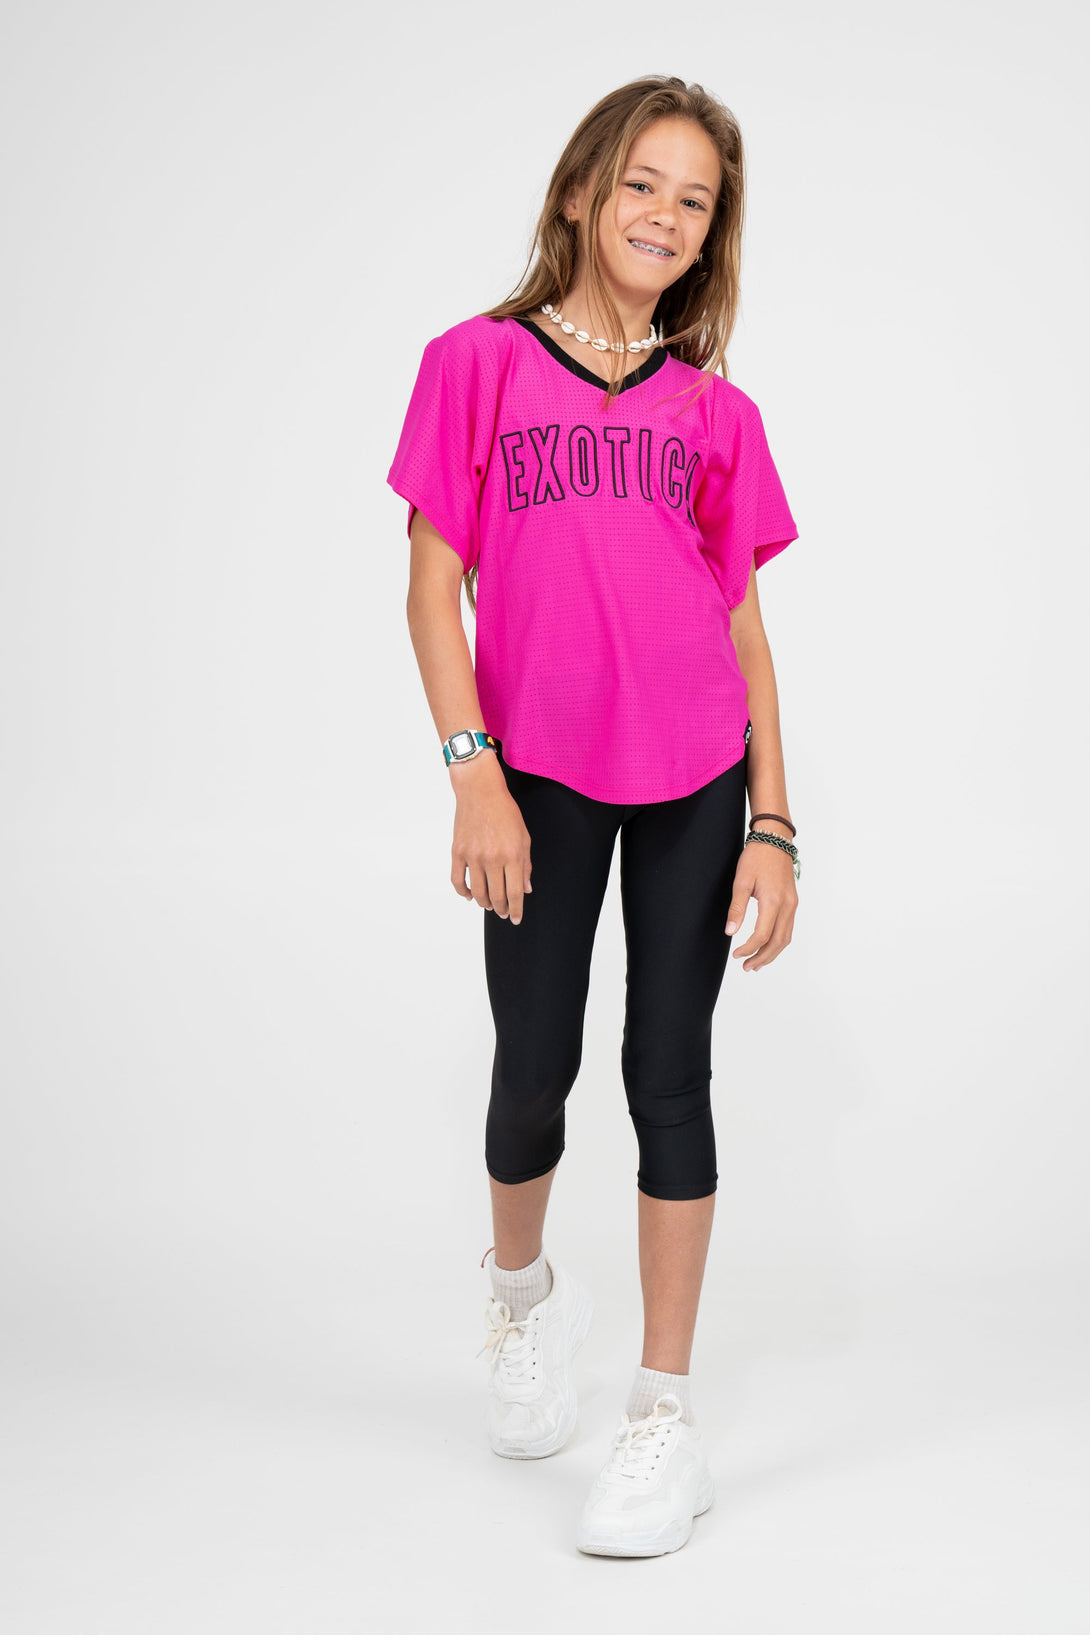 Pink Bball Mesh - Kids V Neck Exotica Black Embroidered Boyfriend Tee-Activewear-Exoticathletica